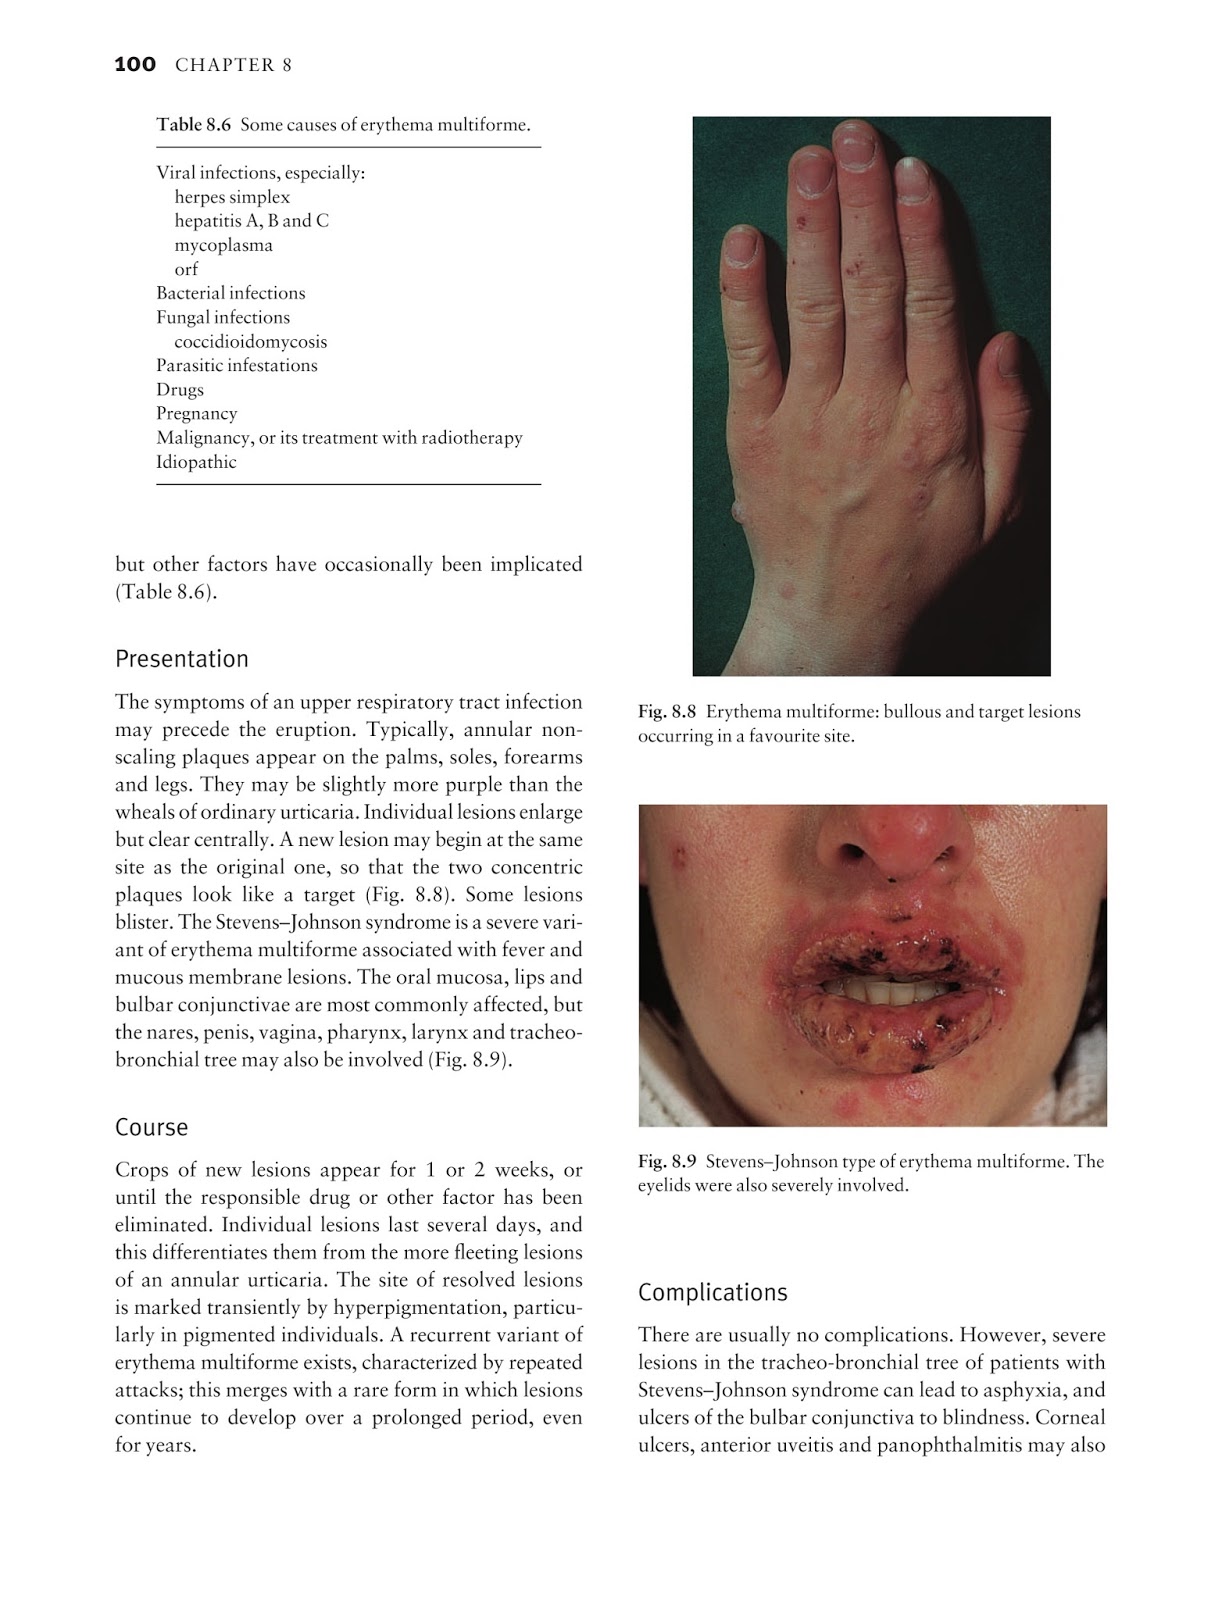 Medicine by Sfakianakis G. Alexandros: Skin disease in perspective 4